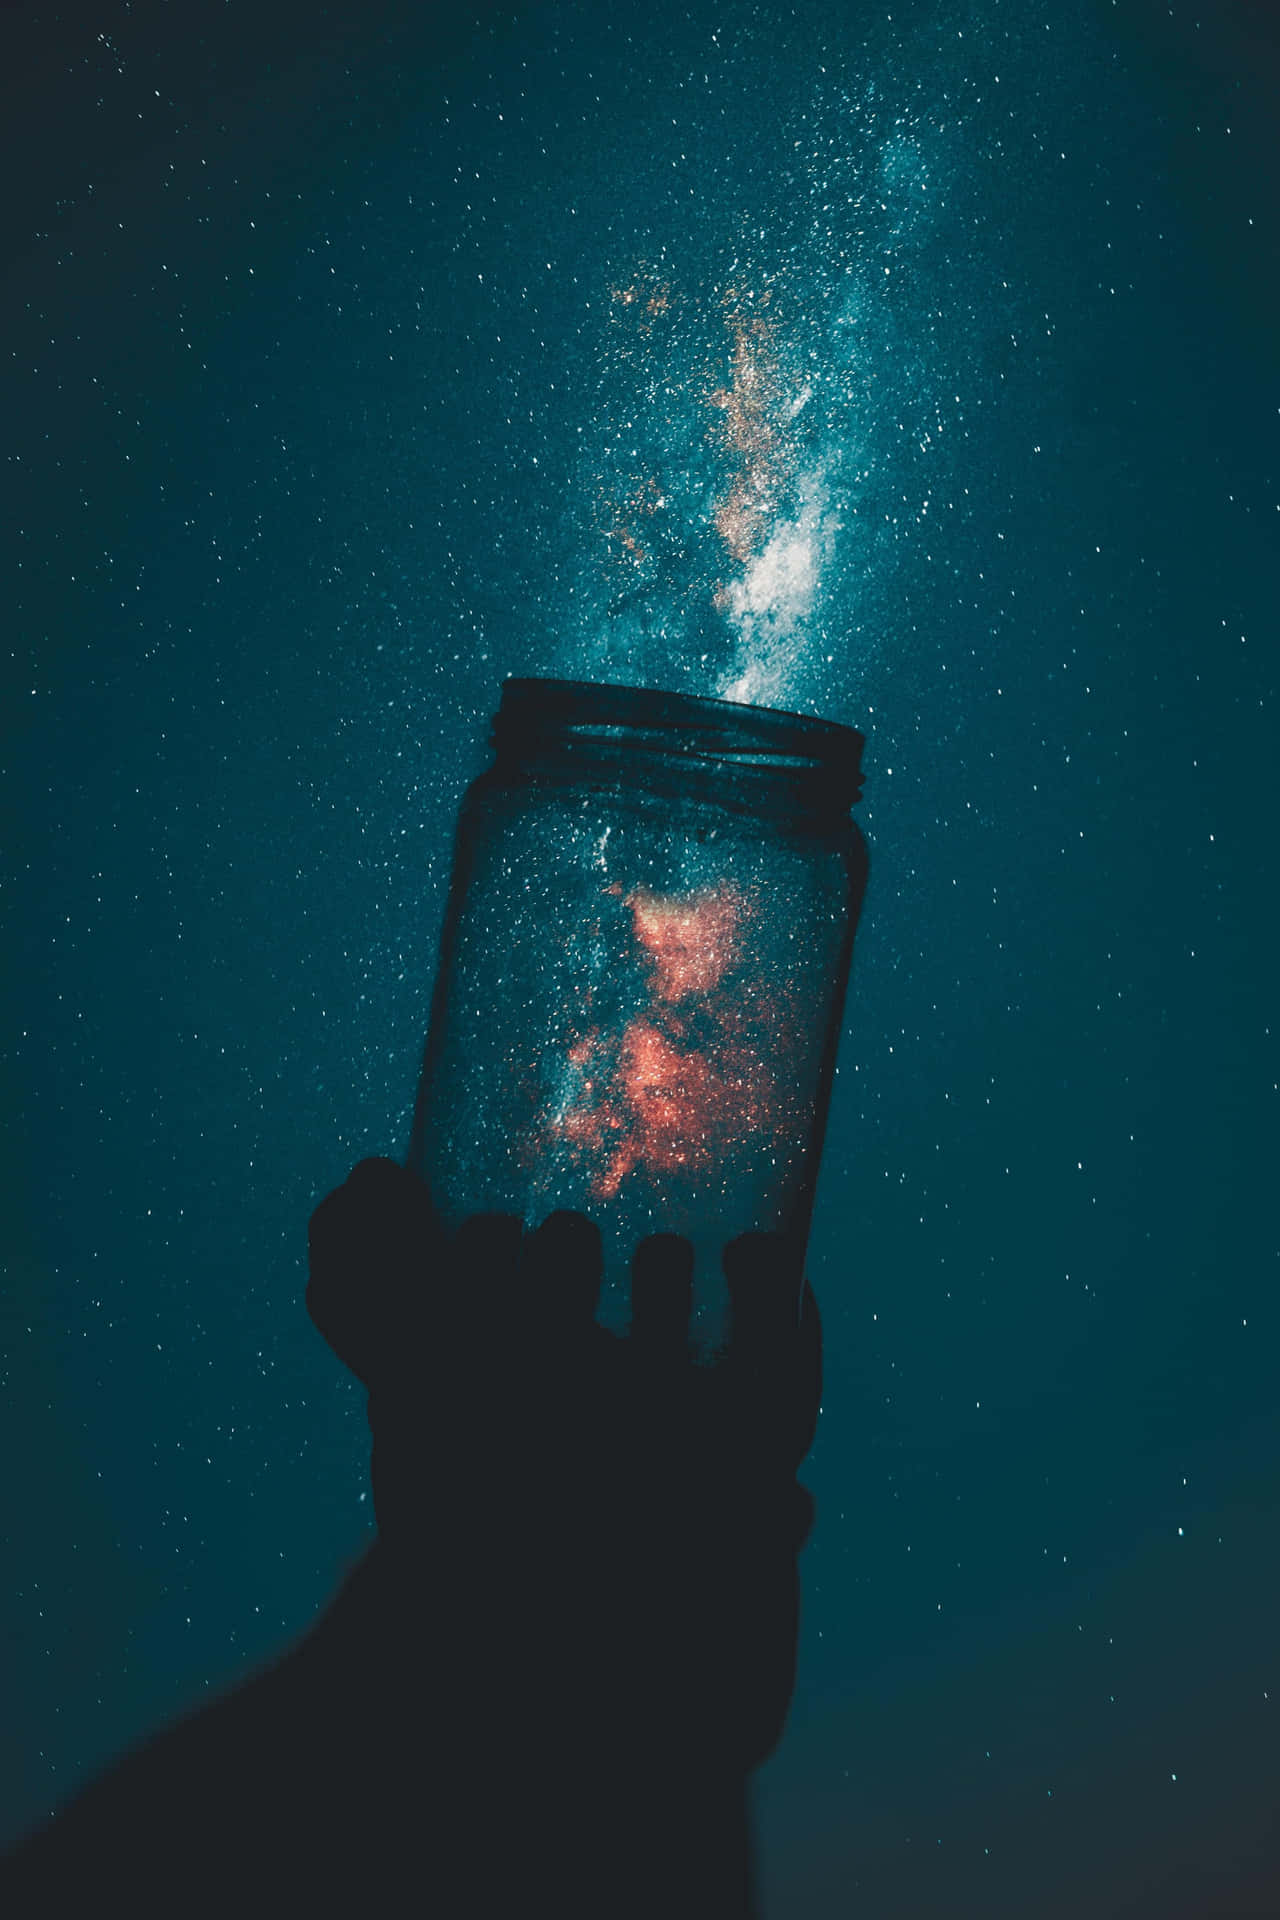 Imaginary Or Inane Stars In A Jar Wallpaper